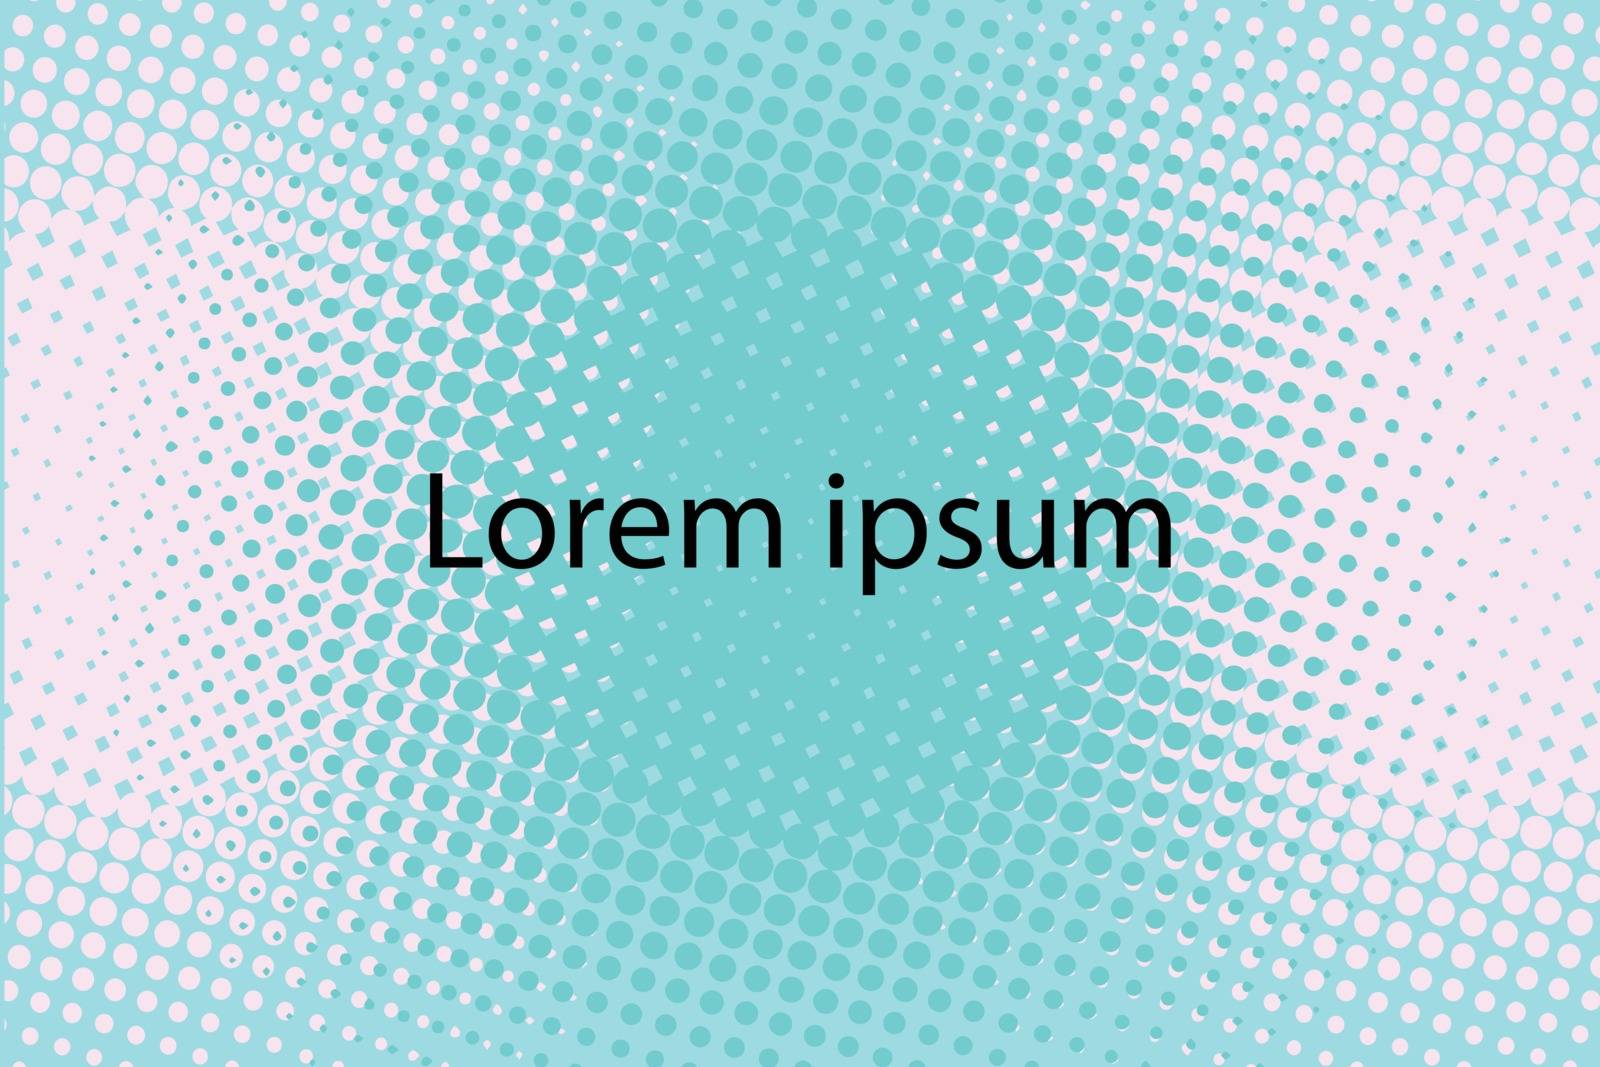 Lorem ipsum green abstract background. Pop art retro comic book vector illustration